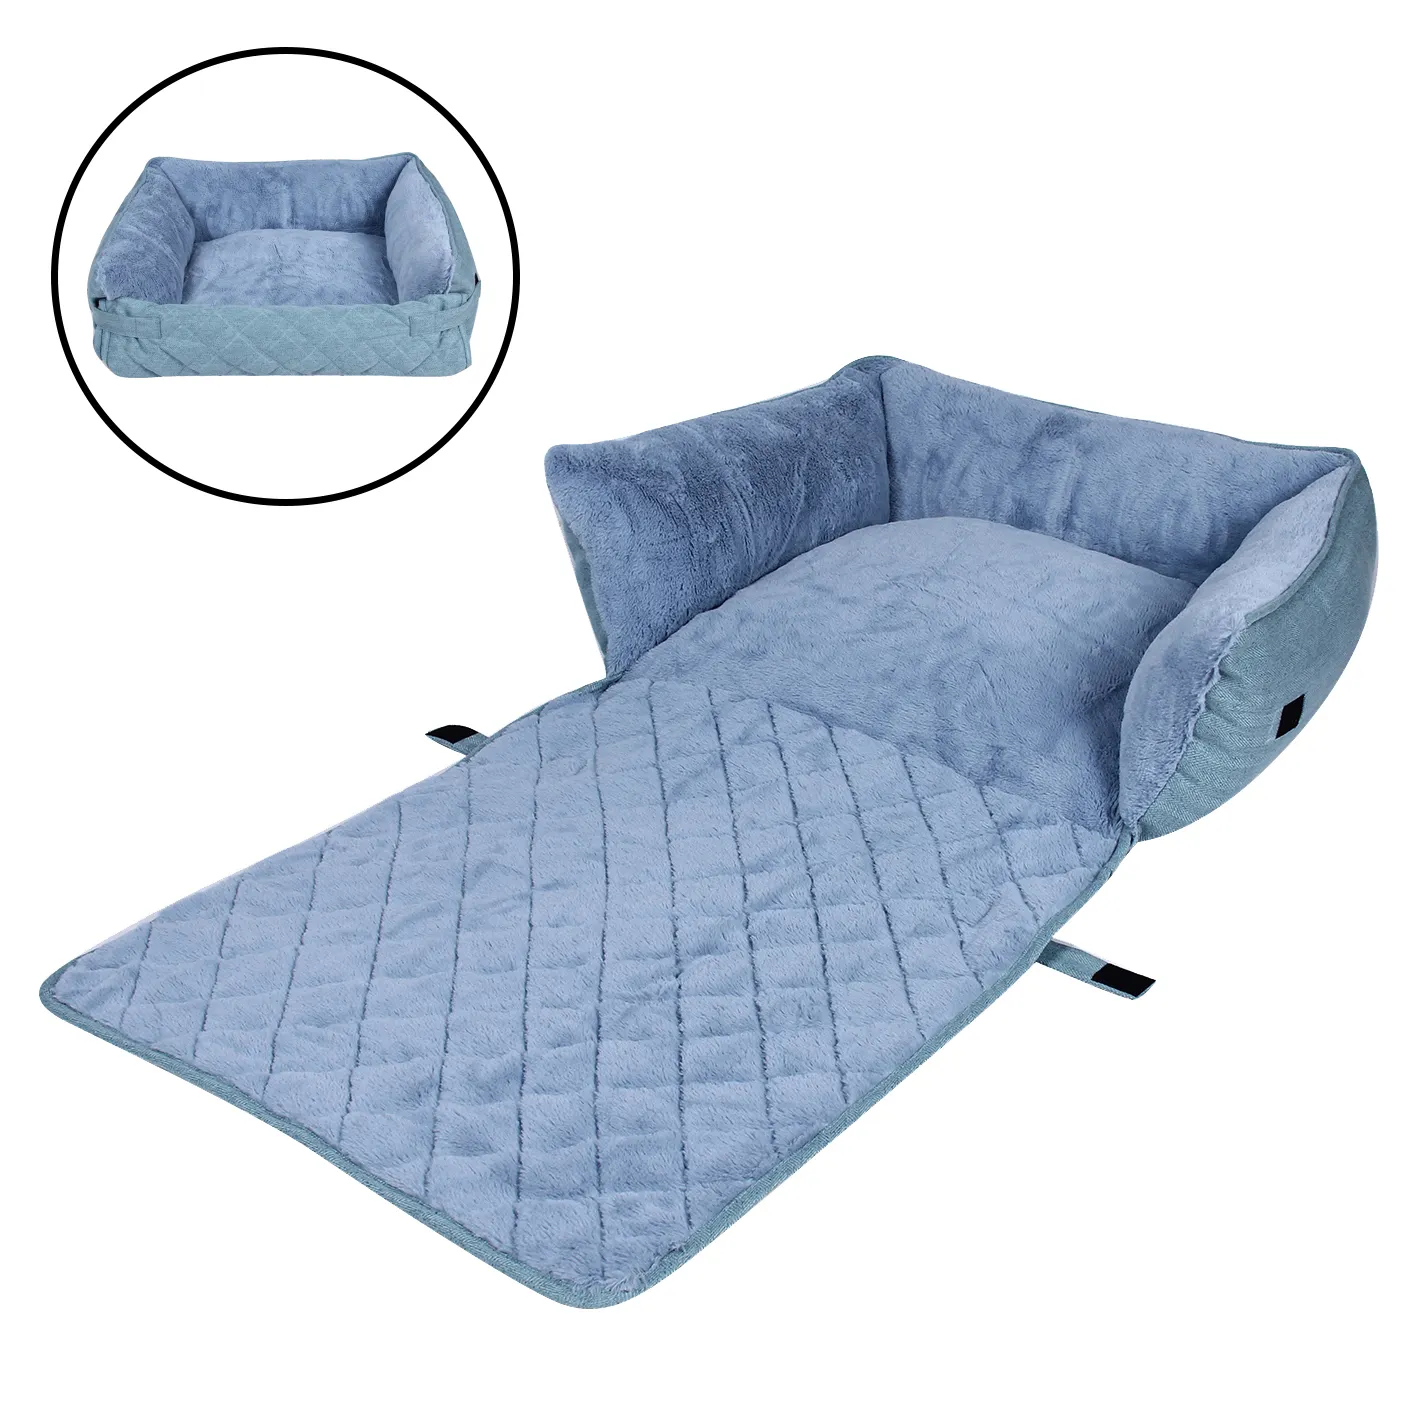 FAIRYPET, fabricante al por mayor, imitación de yute, sofá cama de terciopelo PV para mascotas, parte inferior antideslizante, estirable, extraíble